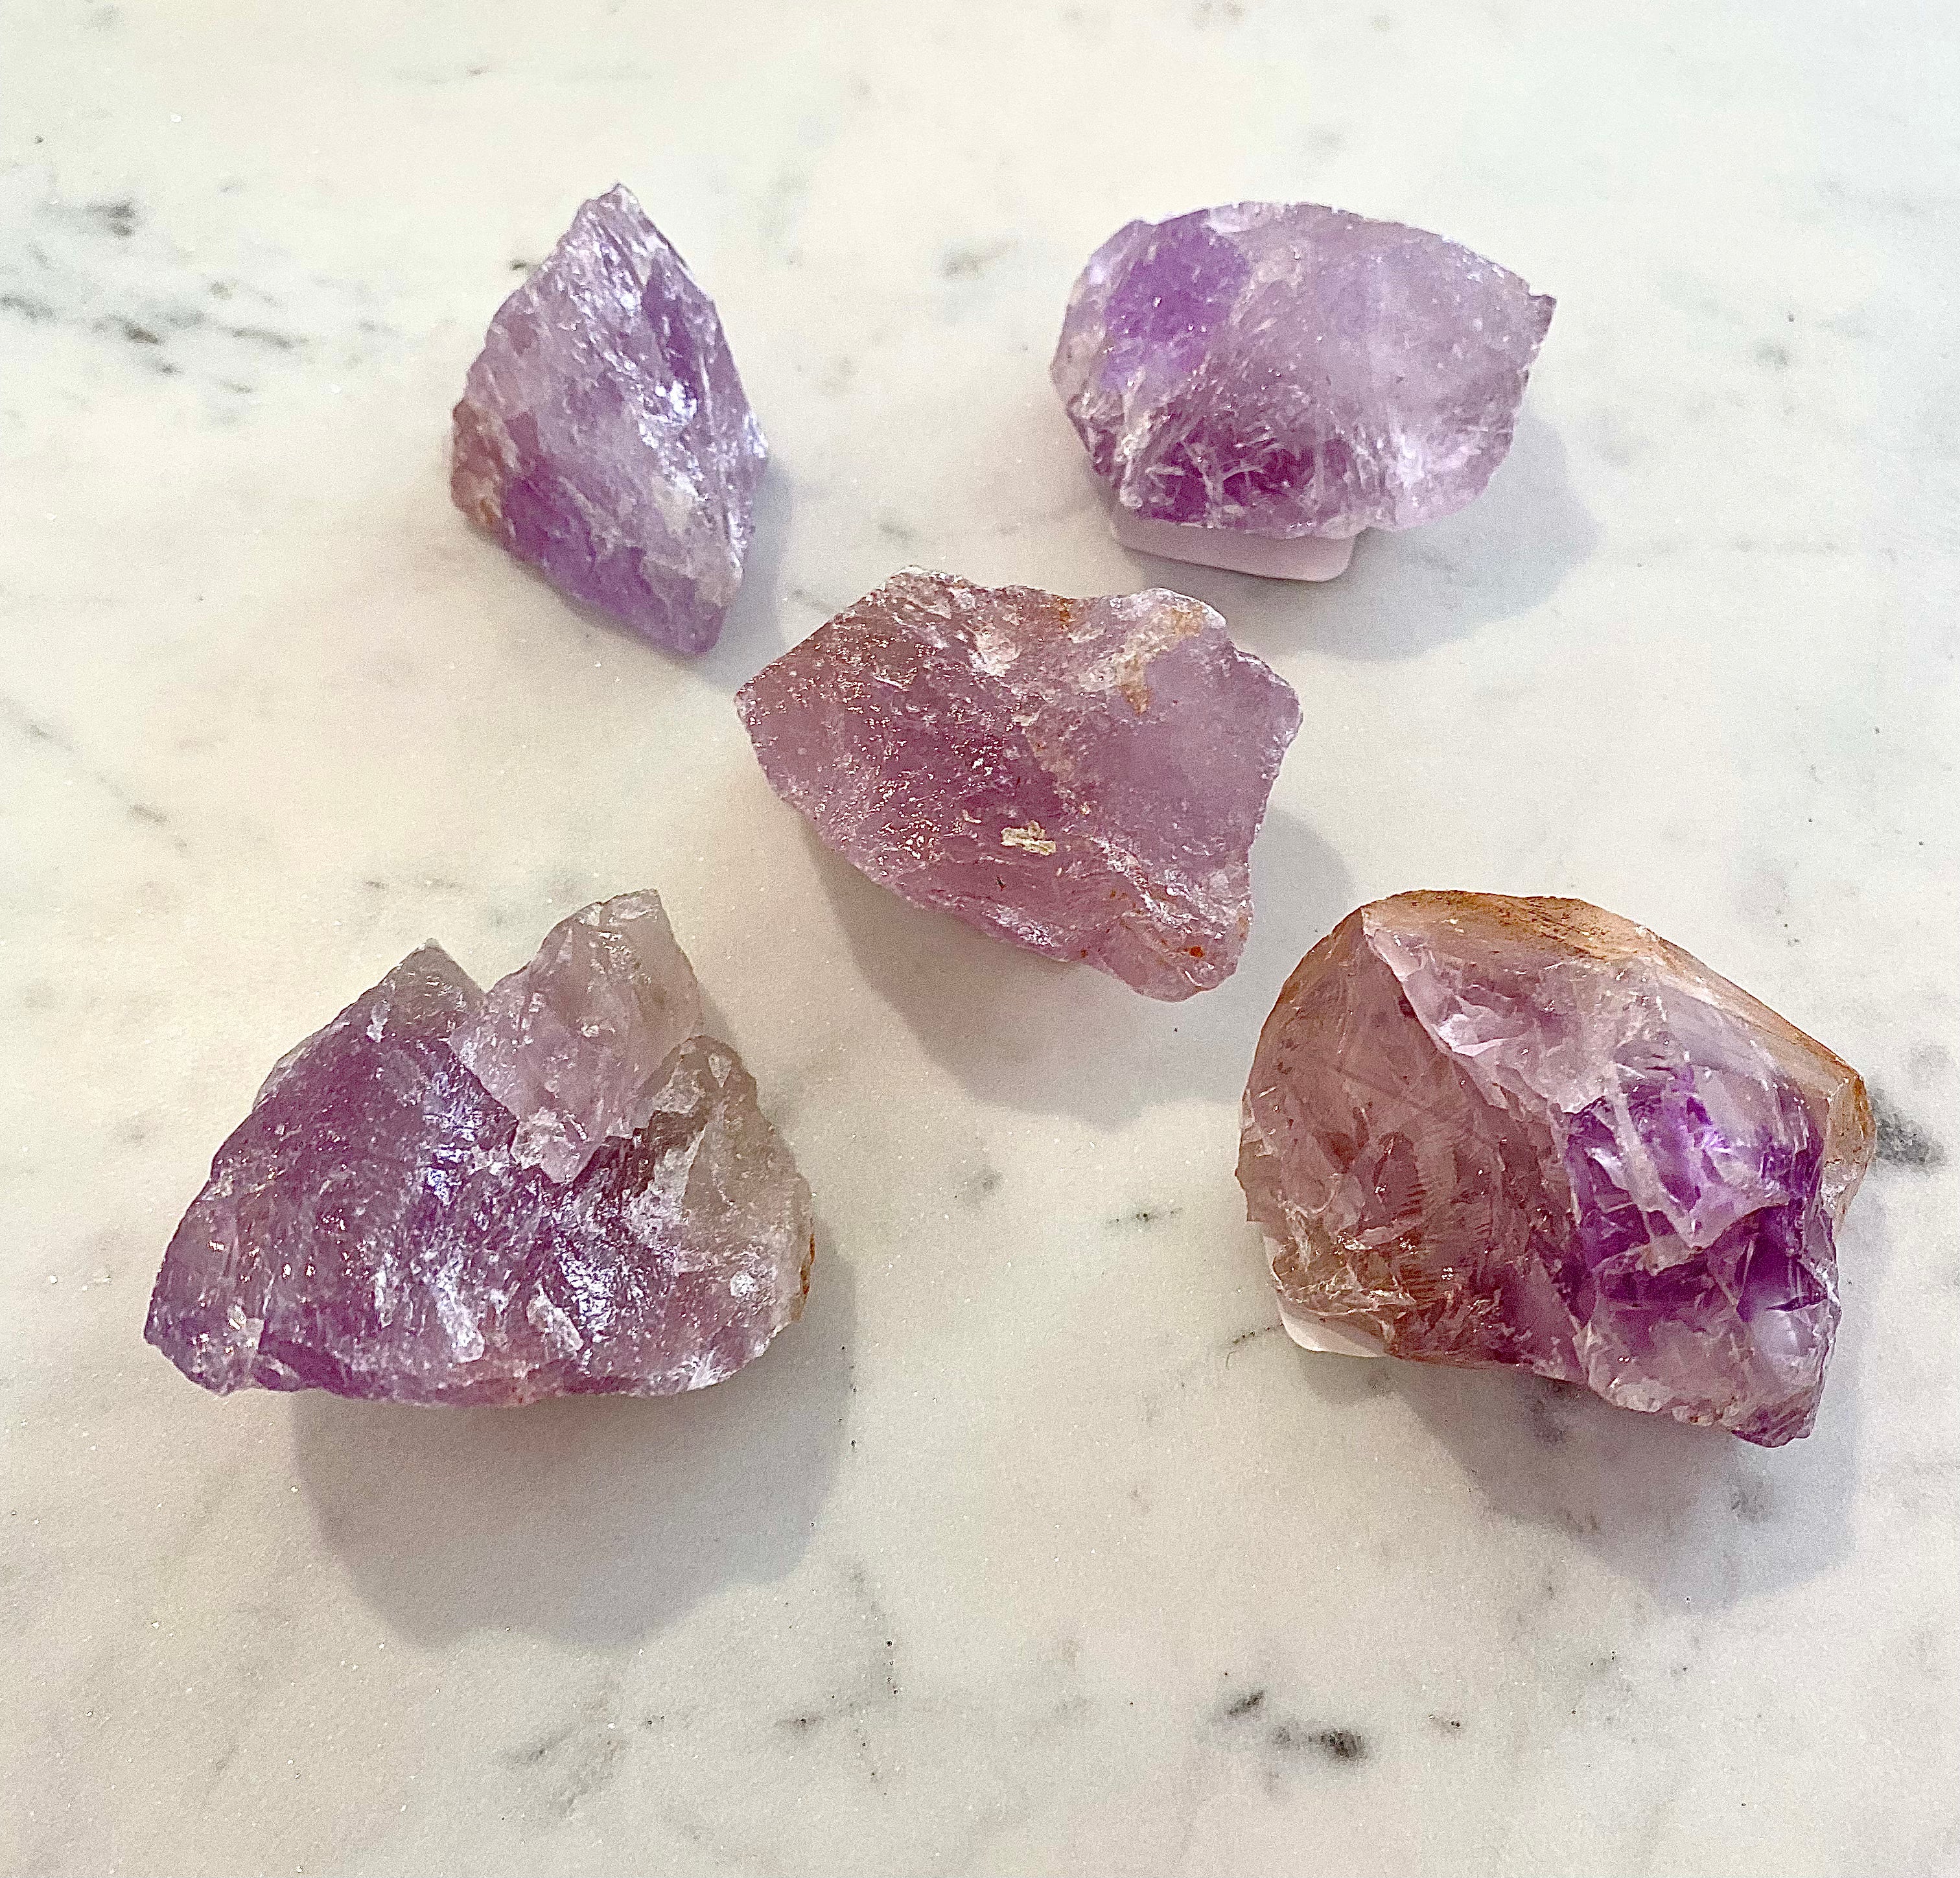 Rough Amethyst Crystal - Medium. Natural amethyst. Amethyst for calming. Stone for 7th chakra. Stone for spiritual healing. Stone for anxiety. Natural, unpolished amethyst